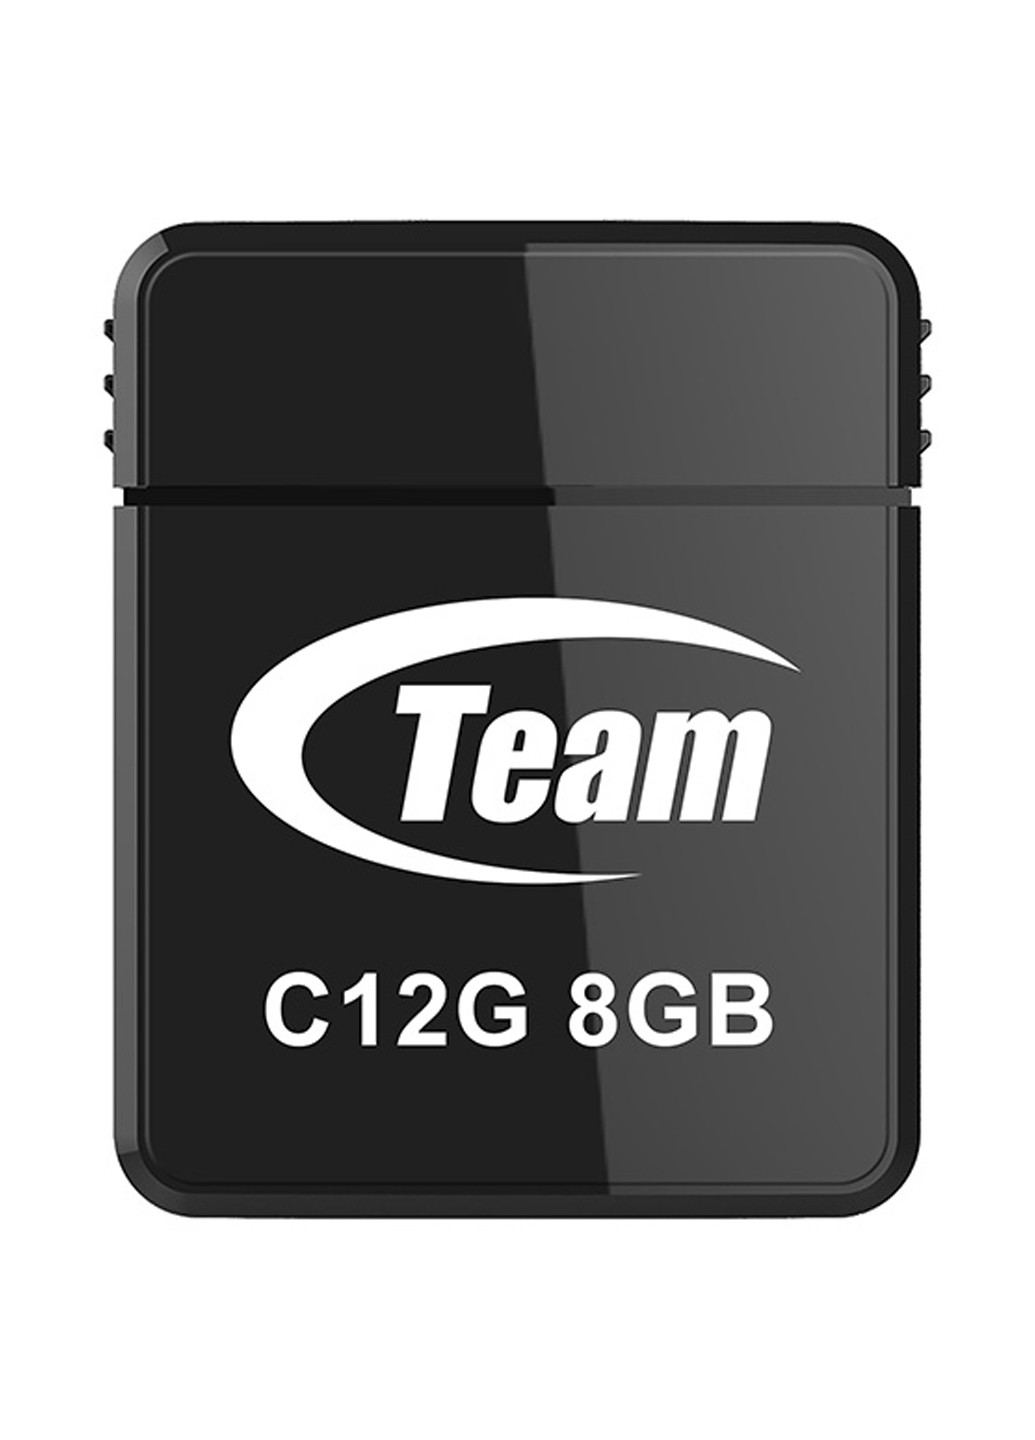 Флеш память USB C12G 8Gb Black (TC12G8GB01) Team флеш память usb team c12g 8gb black (tc12g8gb01) (134201757)